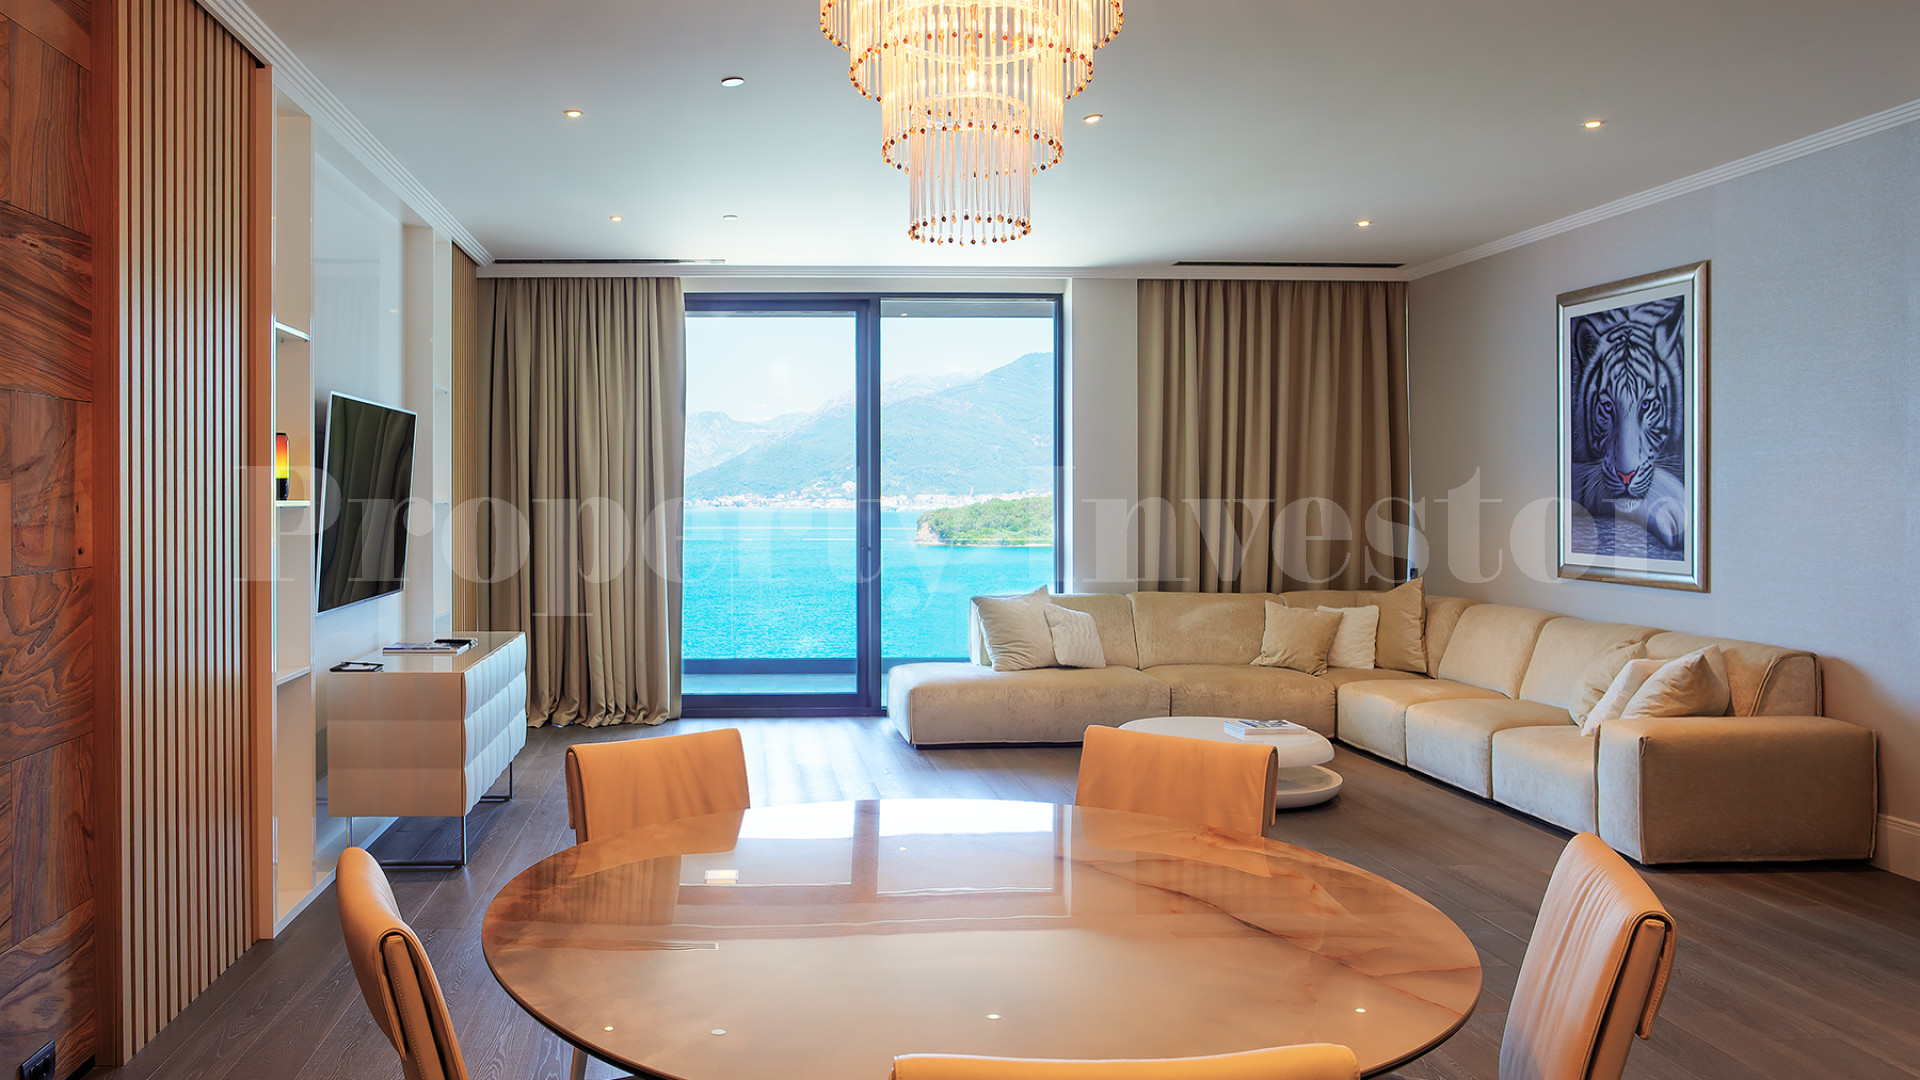 1 Bedroom Apartment in Montenegro with Seaview